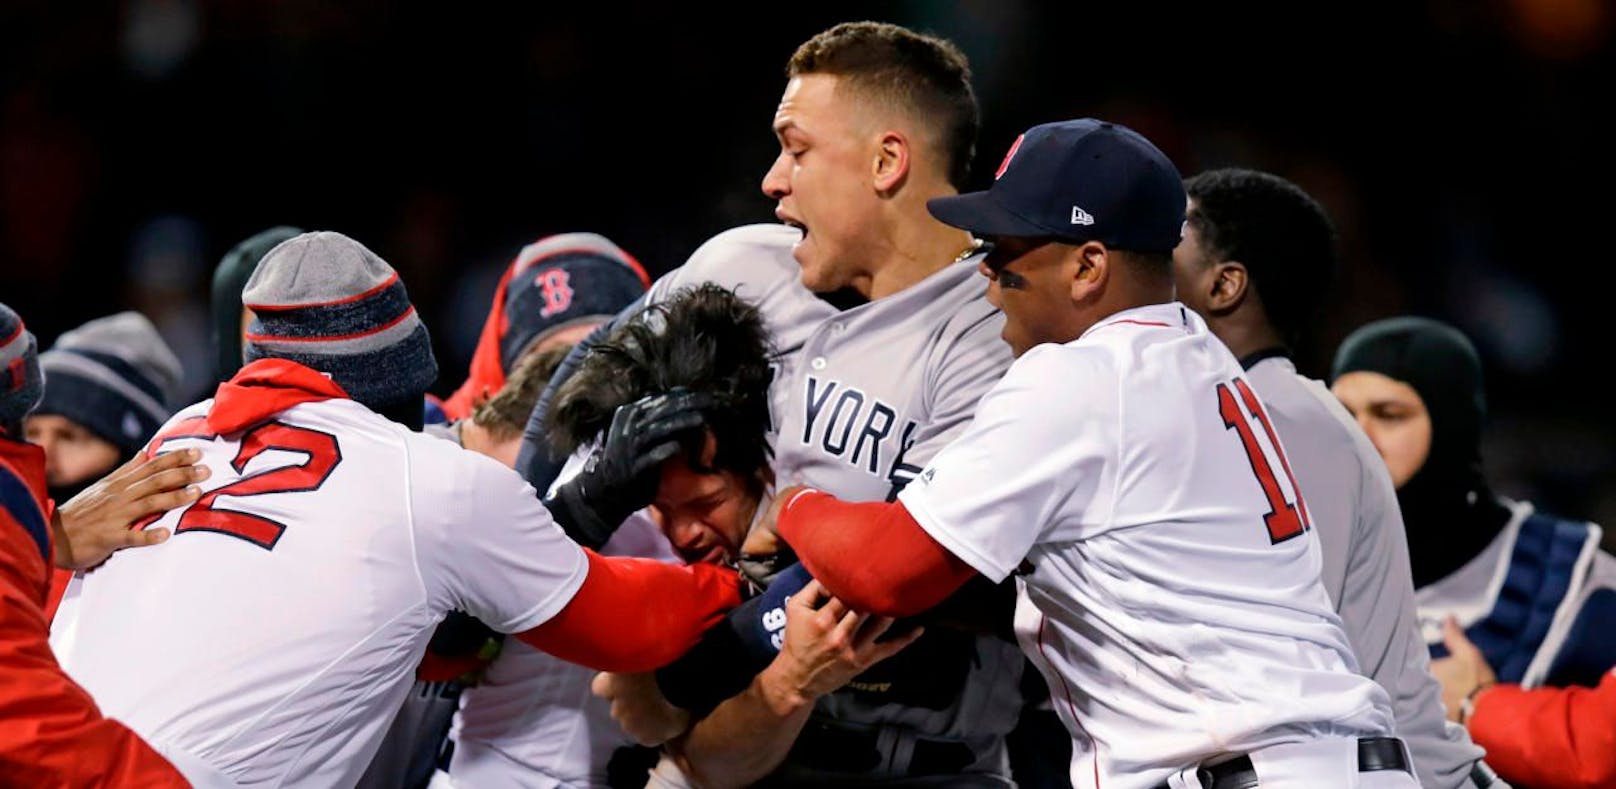 Baseball-Asse liefern sich brutale Massenschlägerei